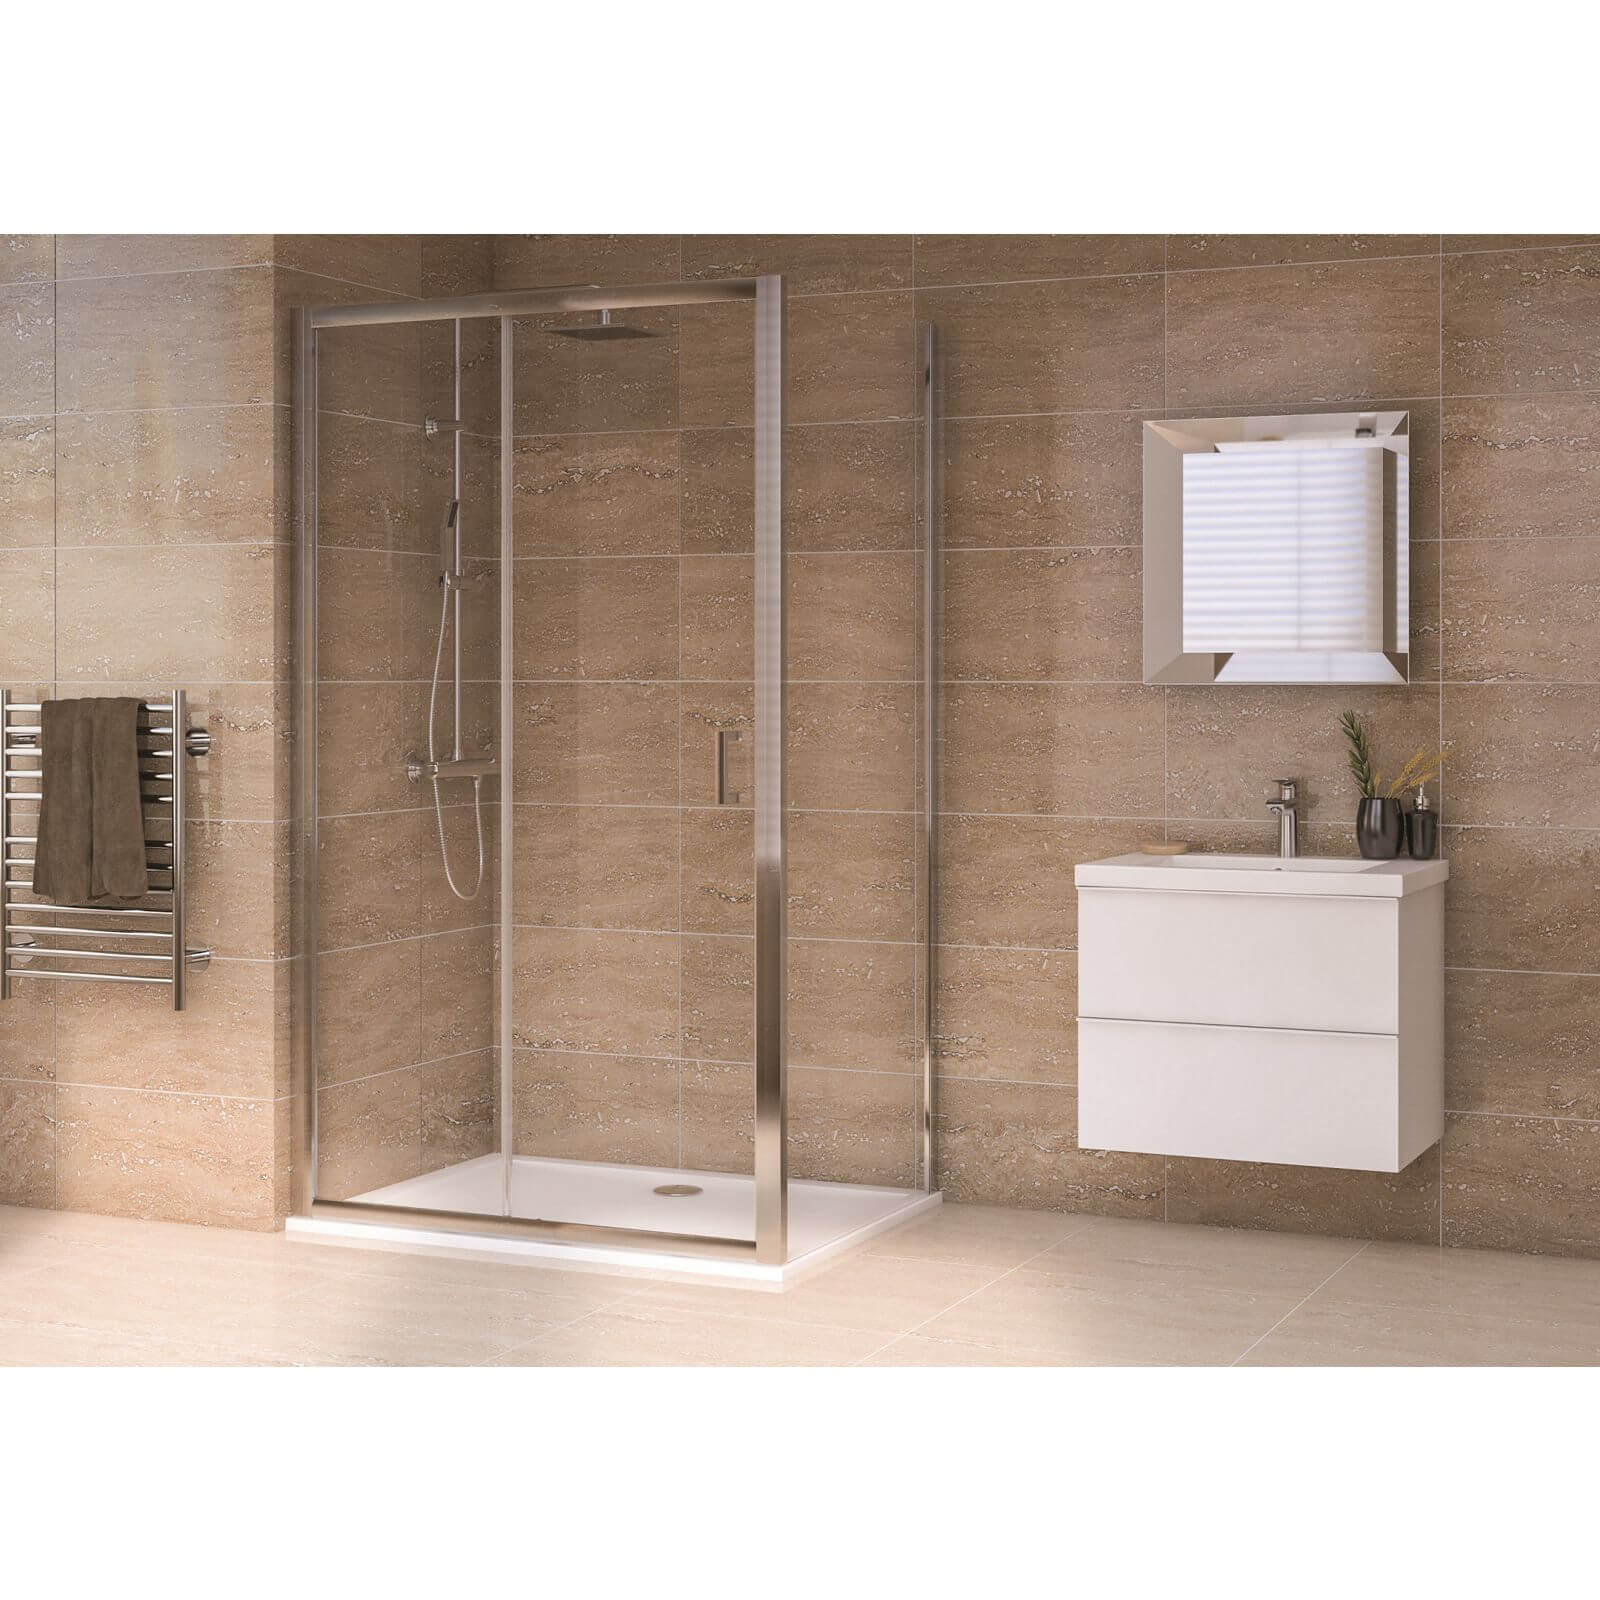 Aqualux Sliding Door Shower Enclosure - 1700 x 900mm